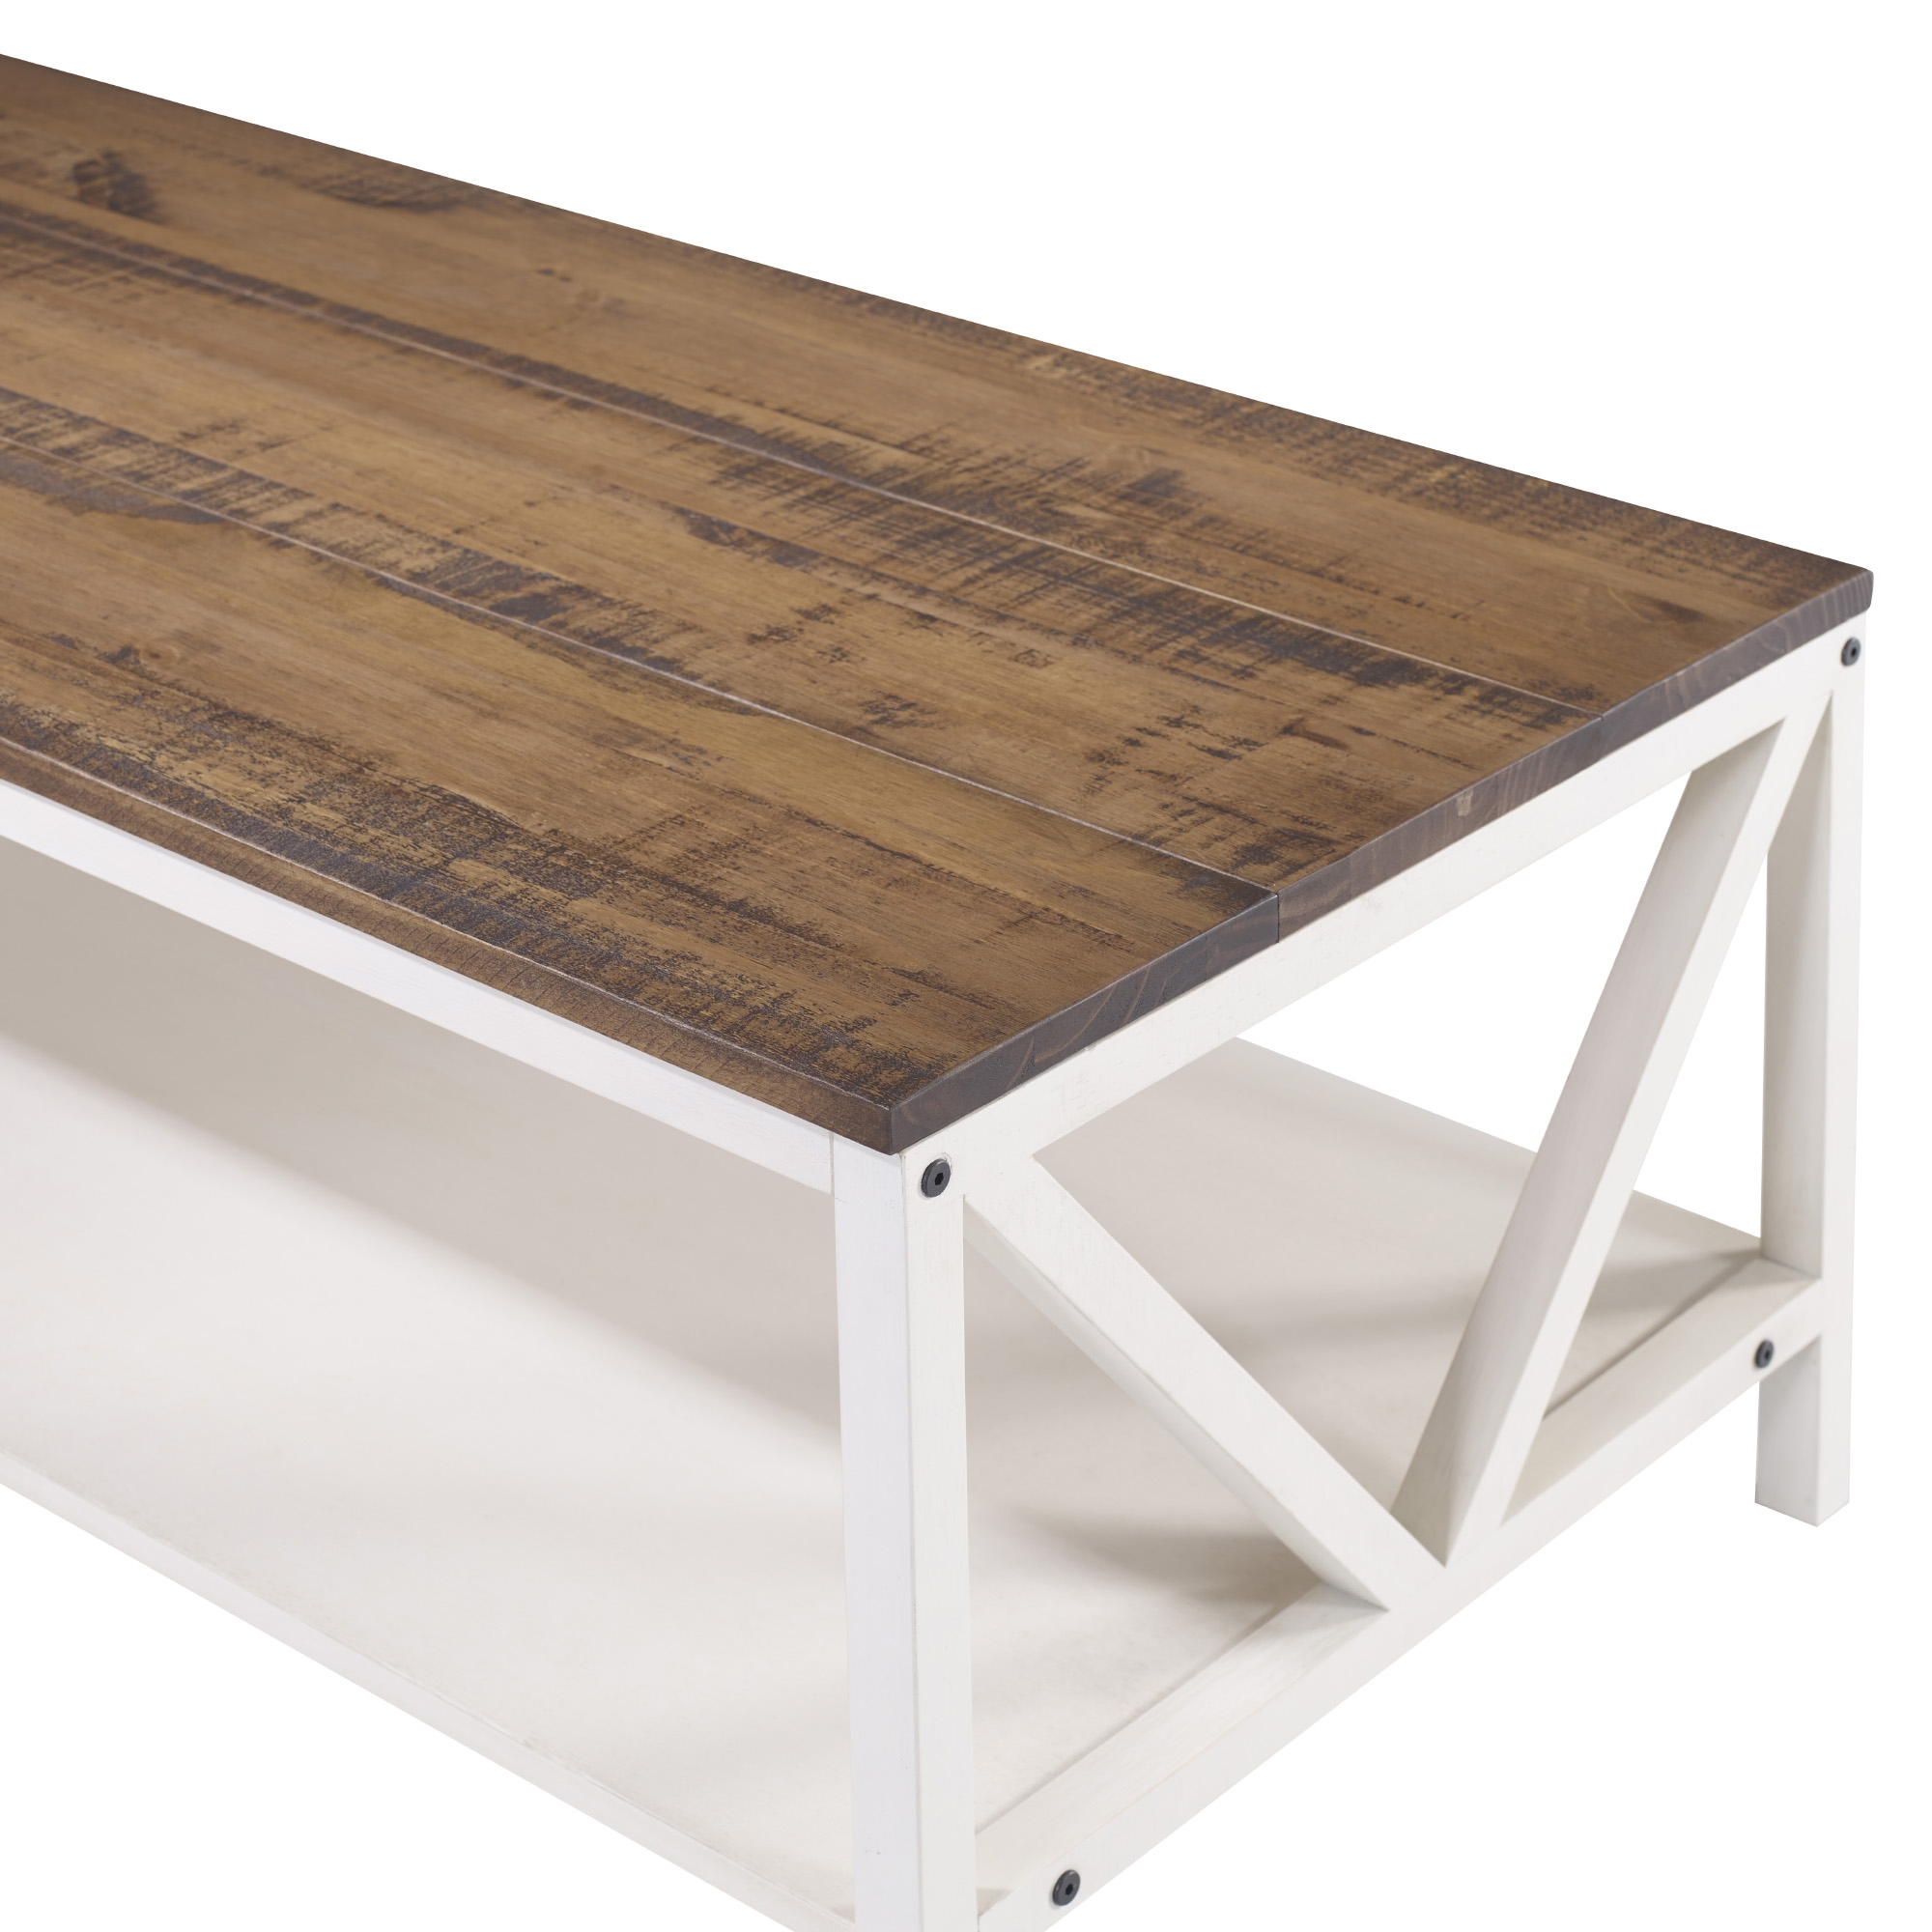 Natalee 48" Distressed Farmhouse Coffee Table - Rustic Oak/White Wash - Image 5